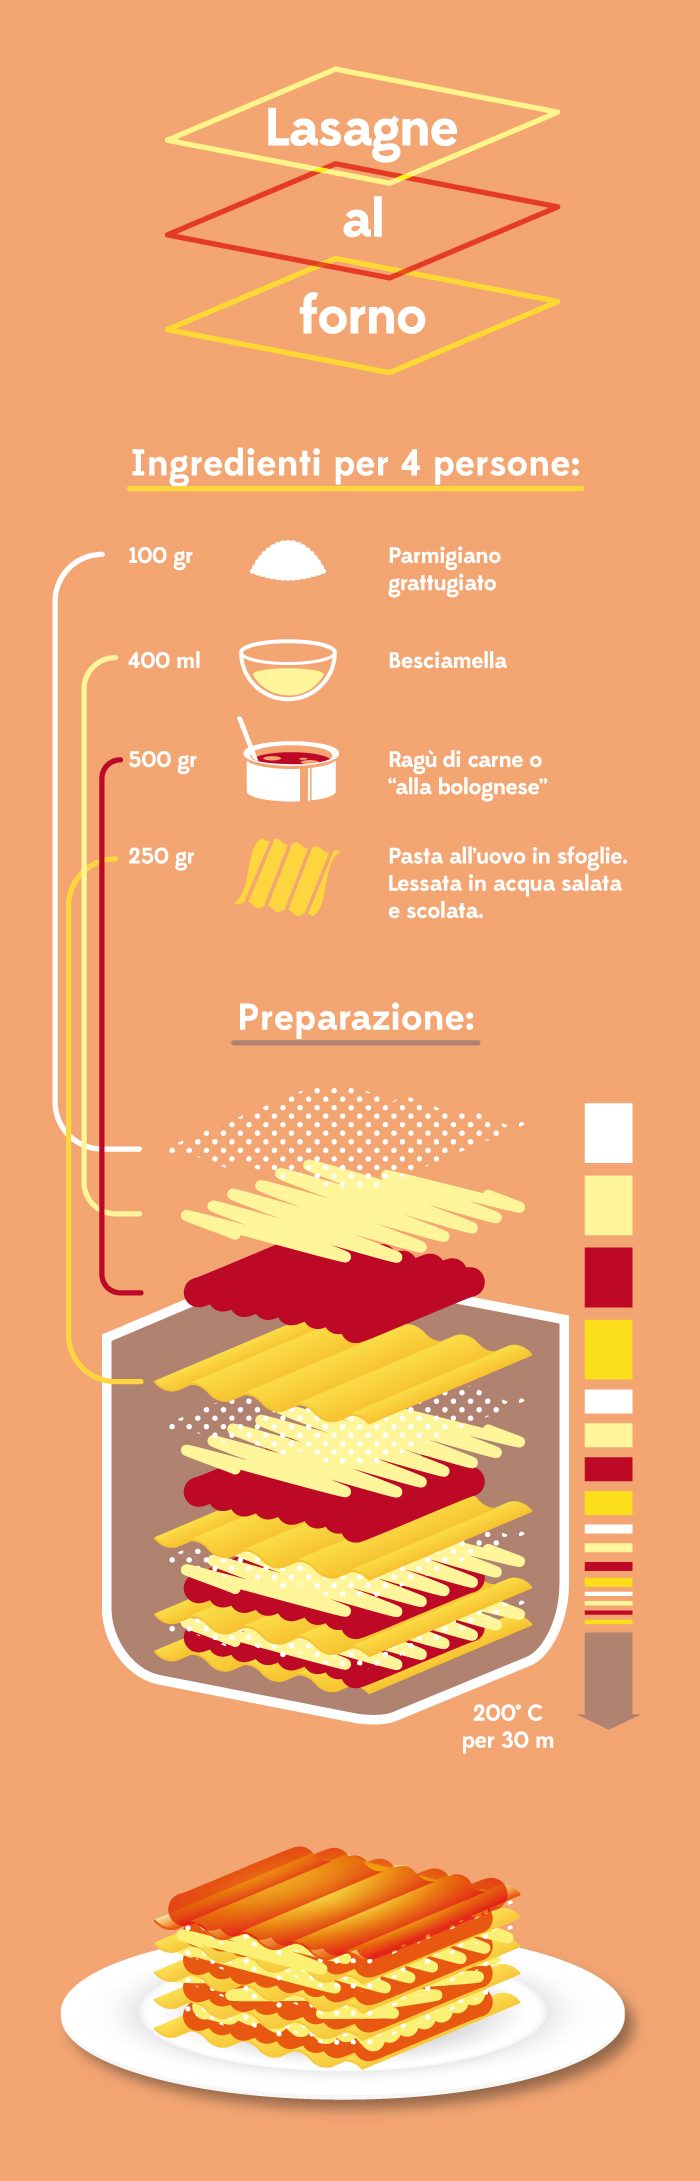 spollo kitchen digital Lasagne Forno Lasagna Cucina ricetta recipe tutorial how